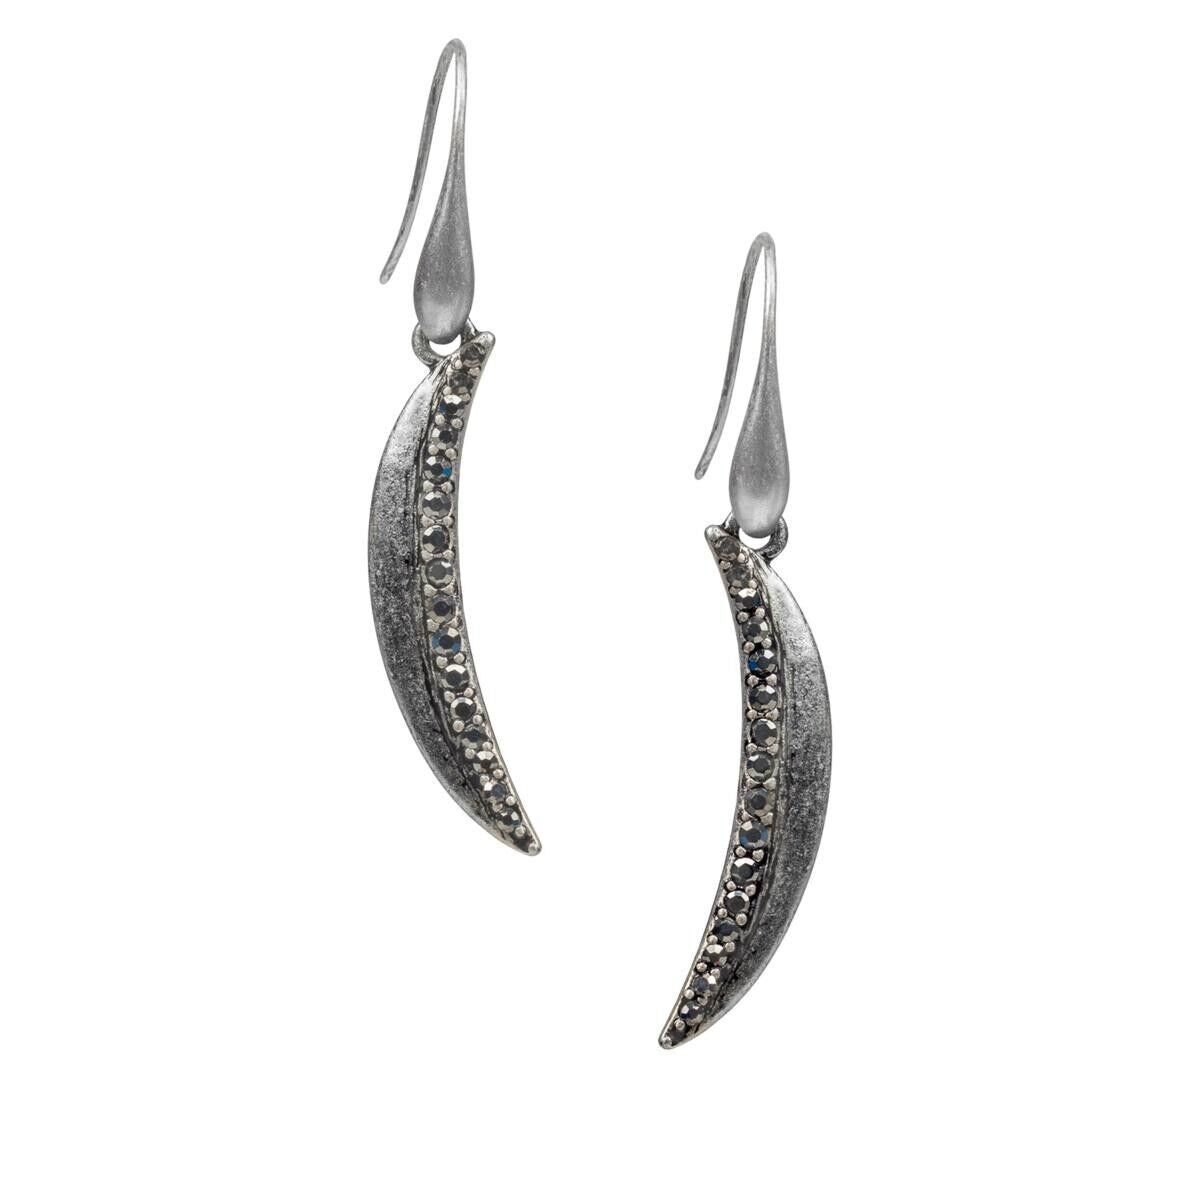 Patricia Nash Small Crescent Moon Drop Earrings. Silvertone (374309427978)